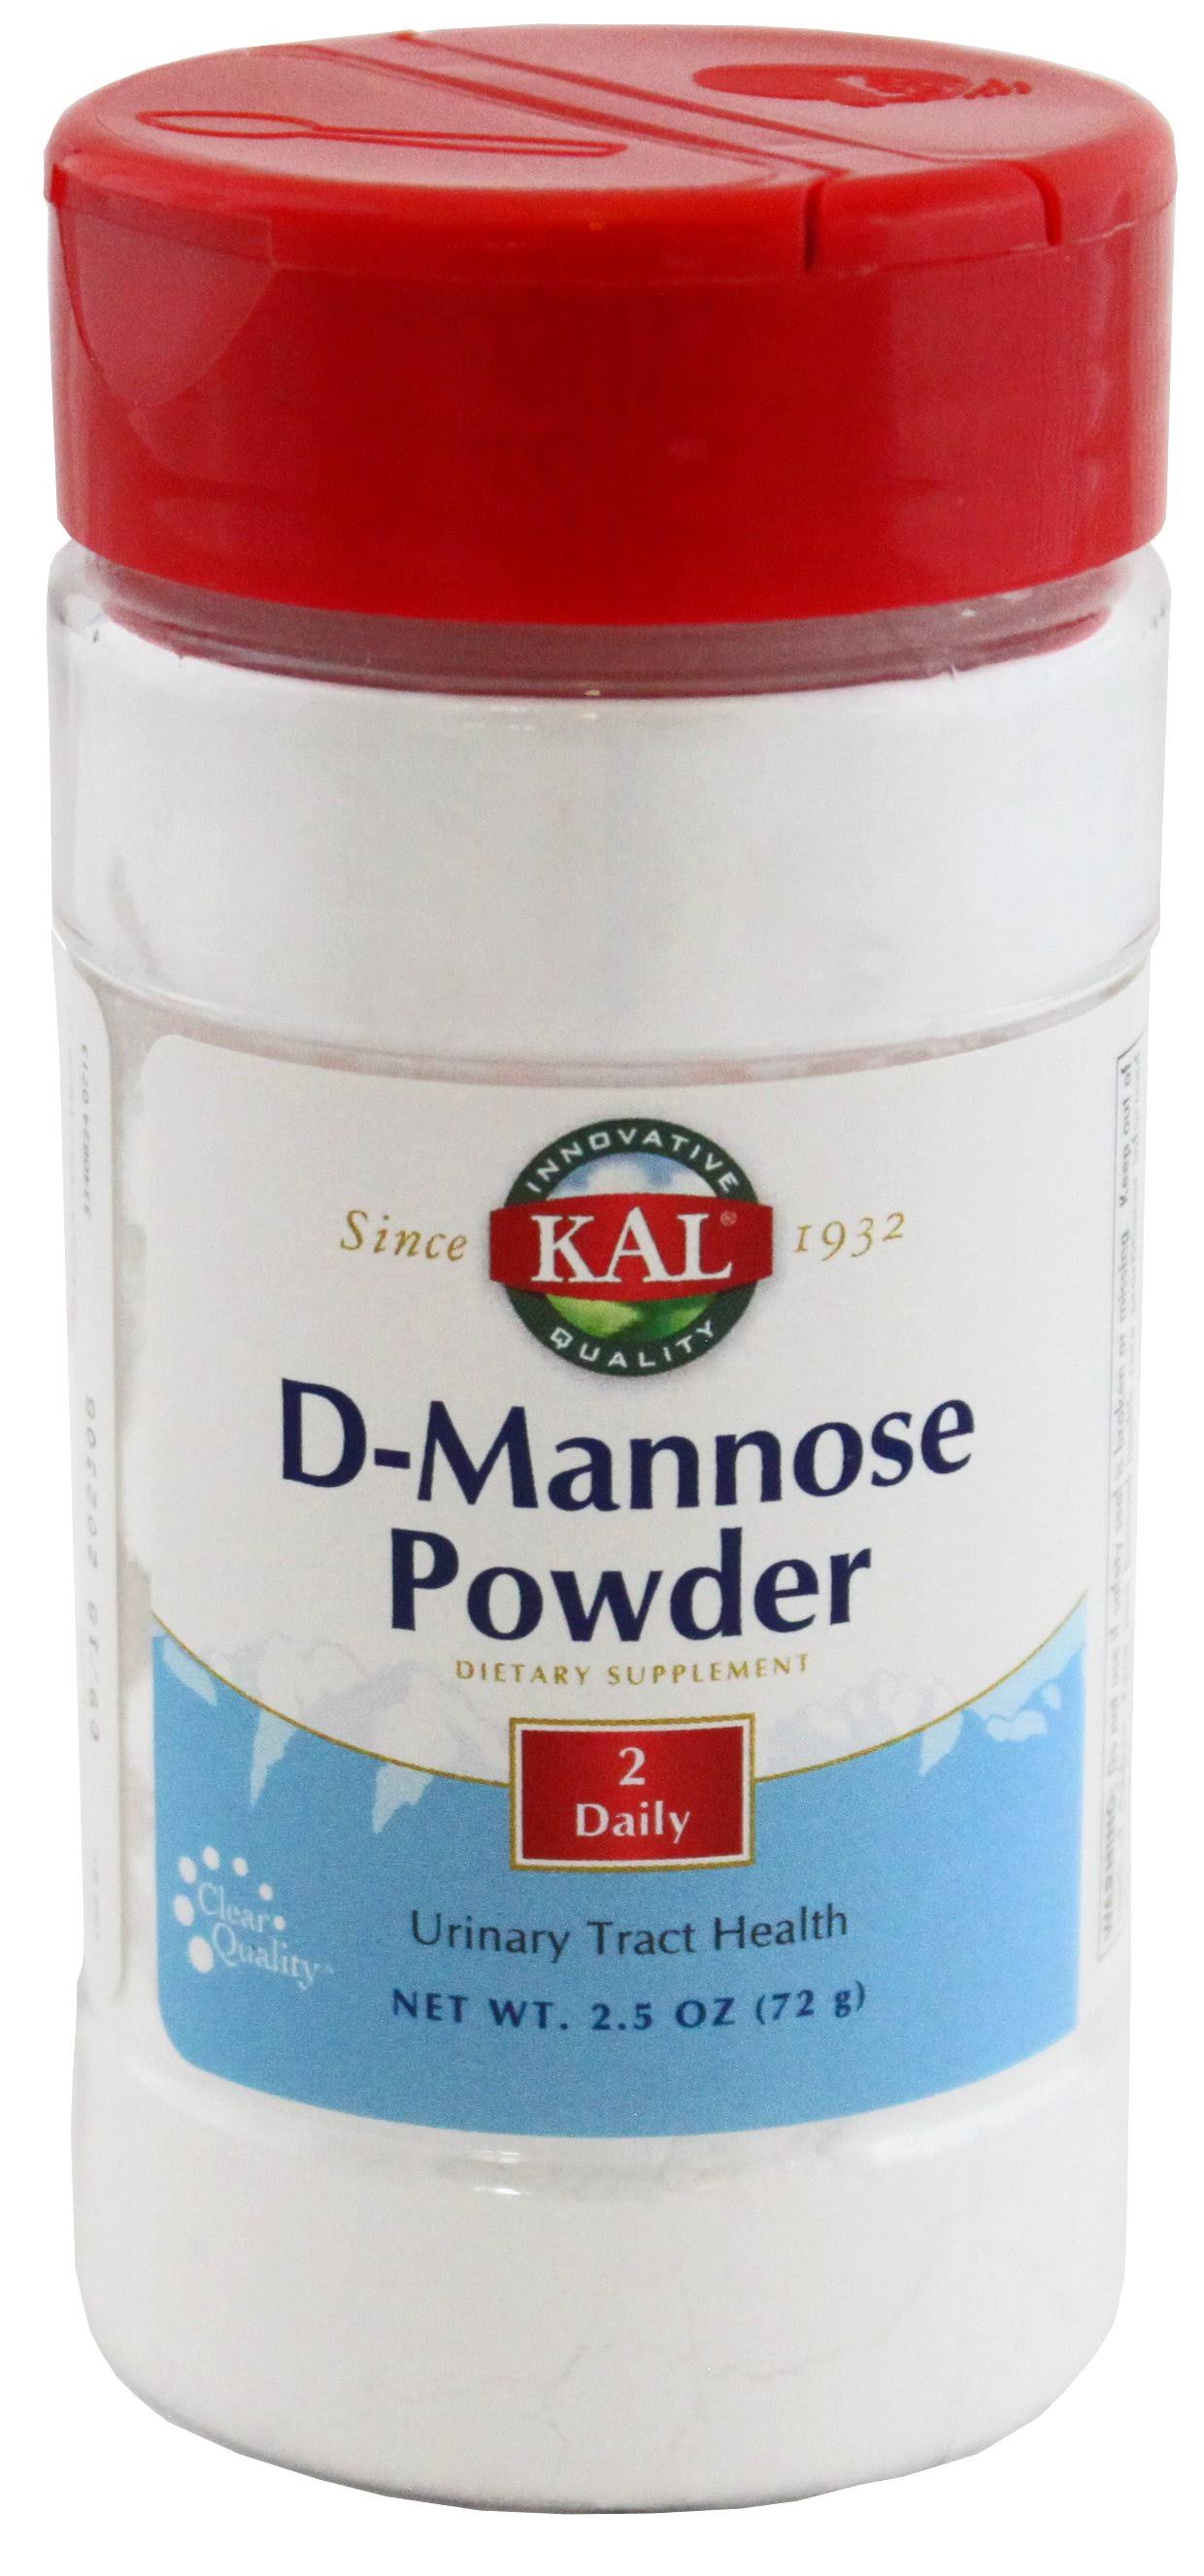 KAL D-Mannose Powder Supplement - Unflavored, 2.5oz, 1600mg